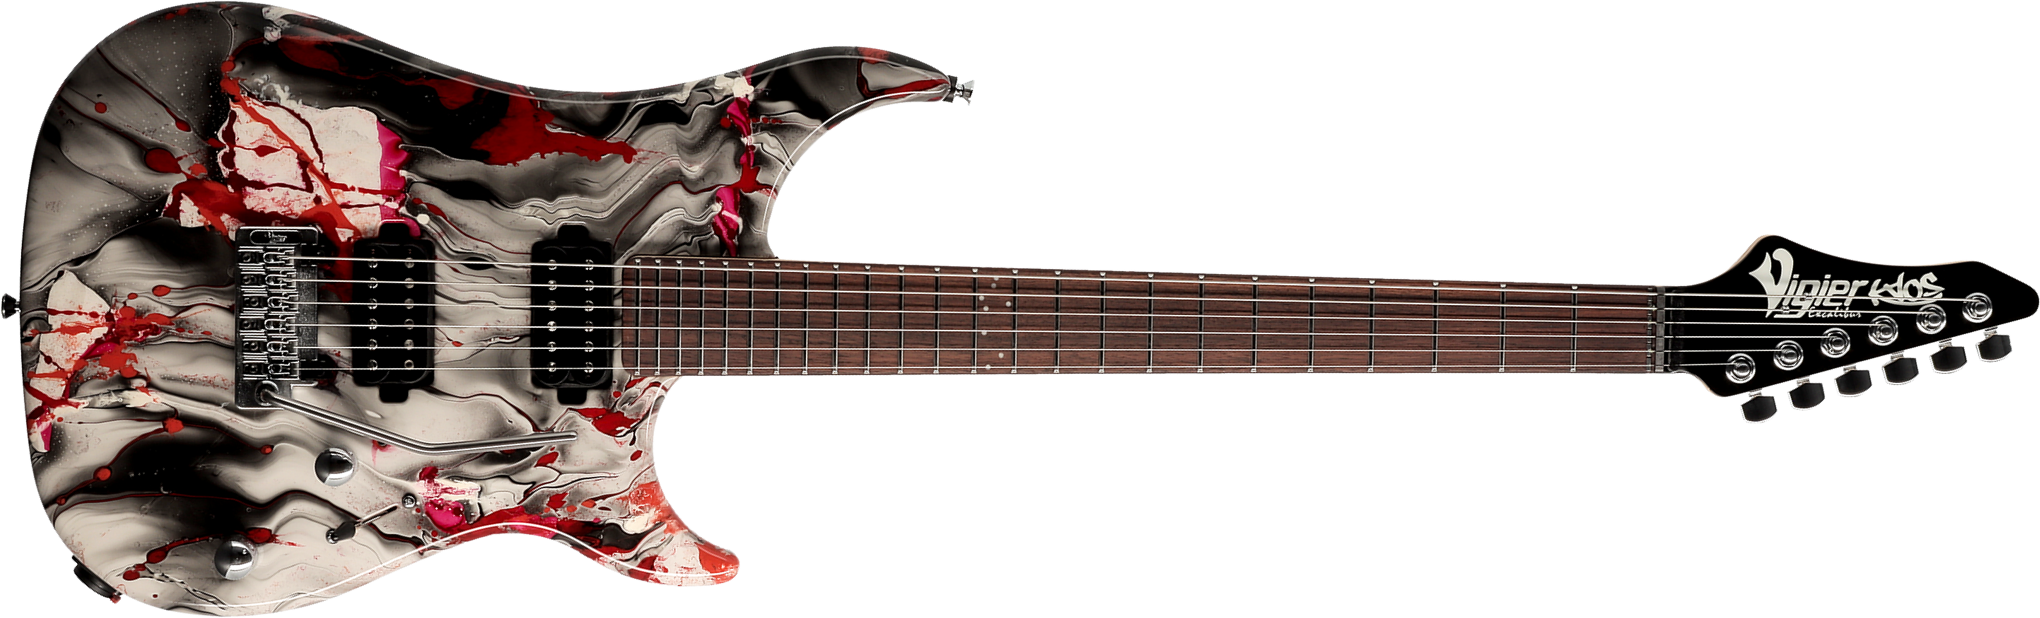 Vigier Excalibur Kaos 2h Trem Rw - Rock Art Chrome Black Red - Guitarra eléctrica con forma de str. - Main picture